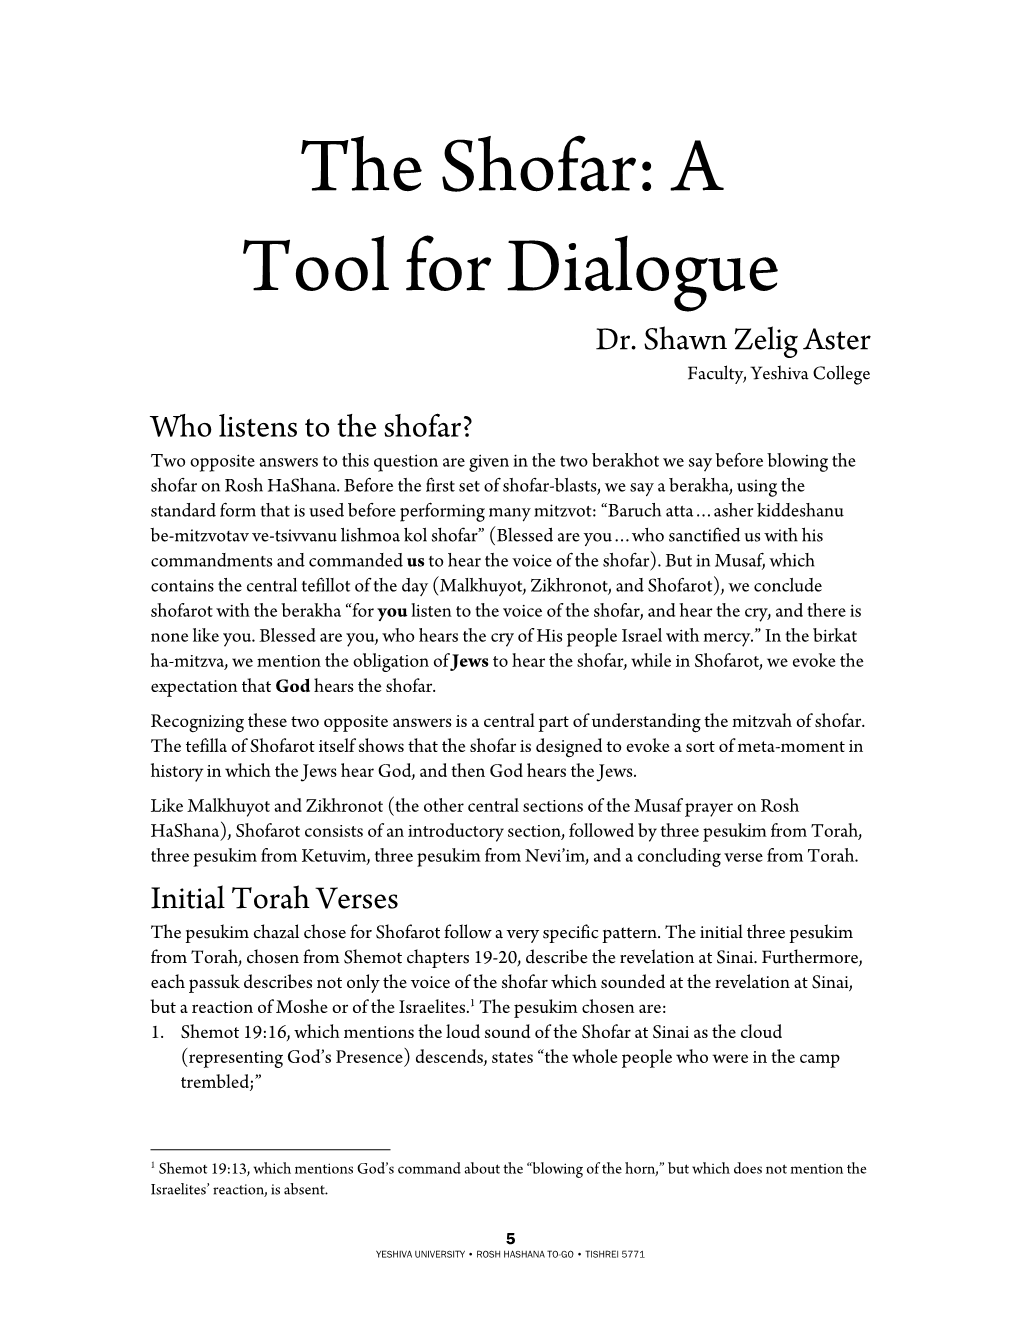 The Shofar: a Tool for Dialogue Dr